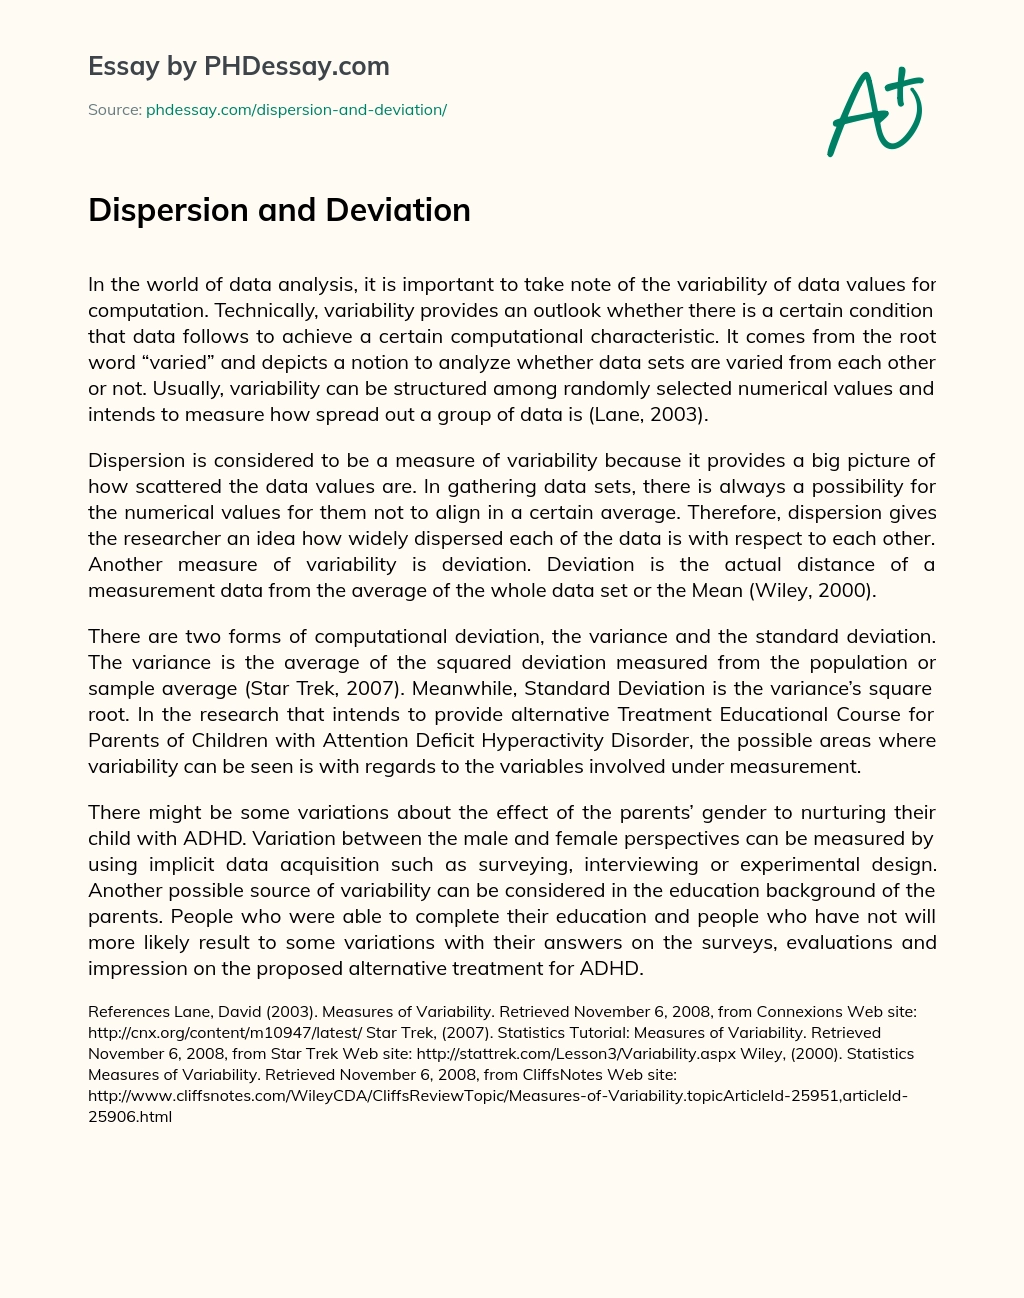 Dispersion and Deviation essay